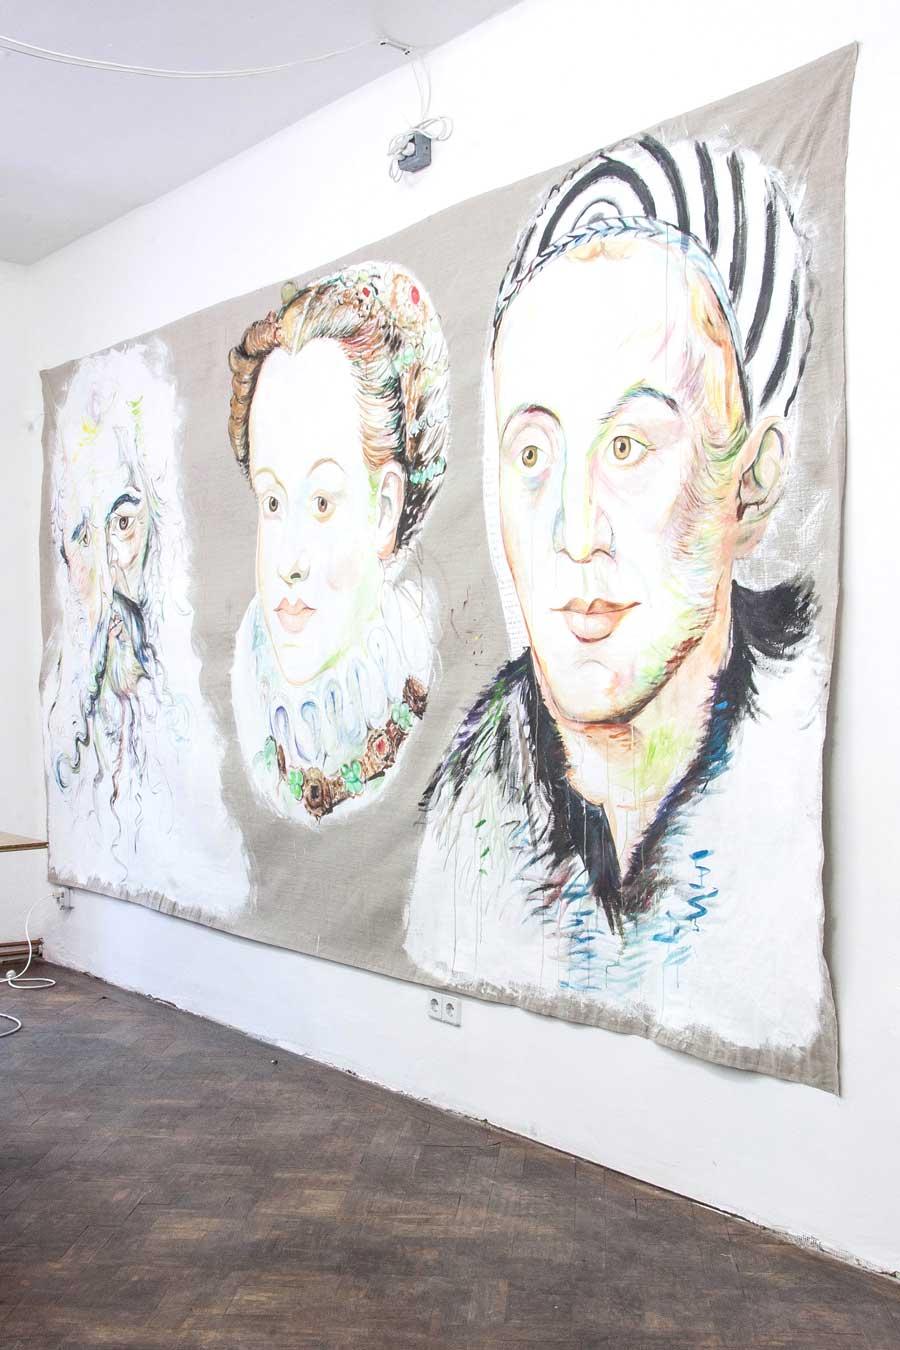 Elke Silvia Krystufek, ”Language”, 2004, 200 x 400 cm, Acryl auf Leinwand